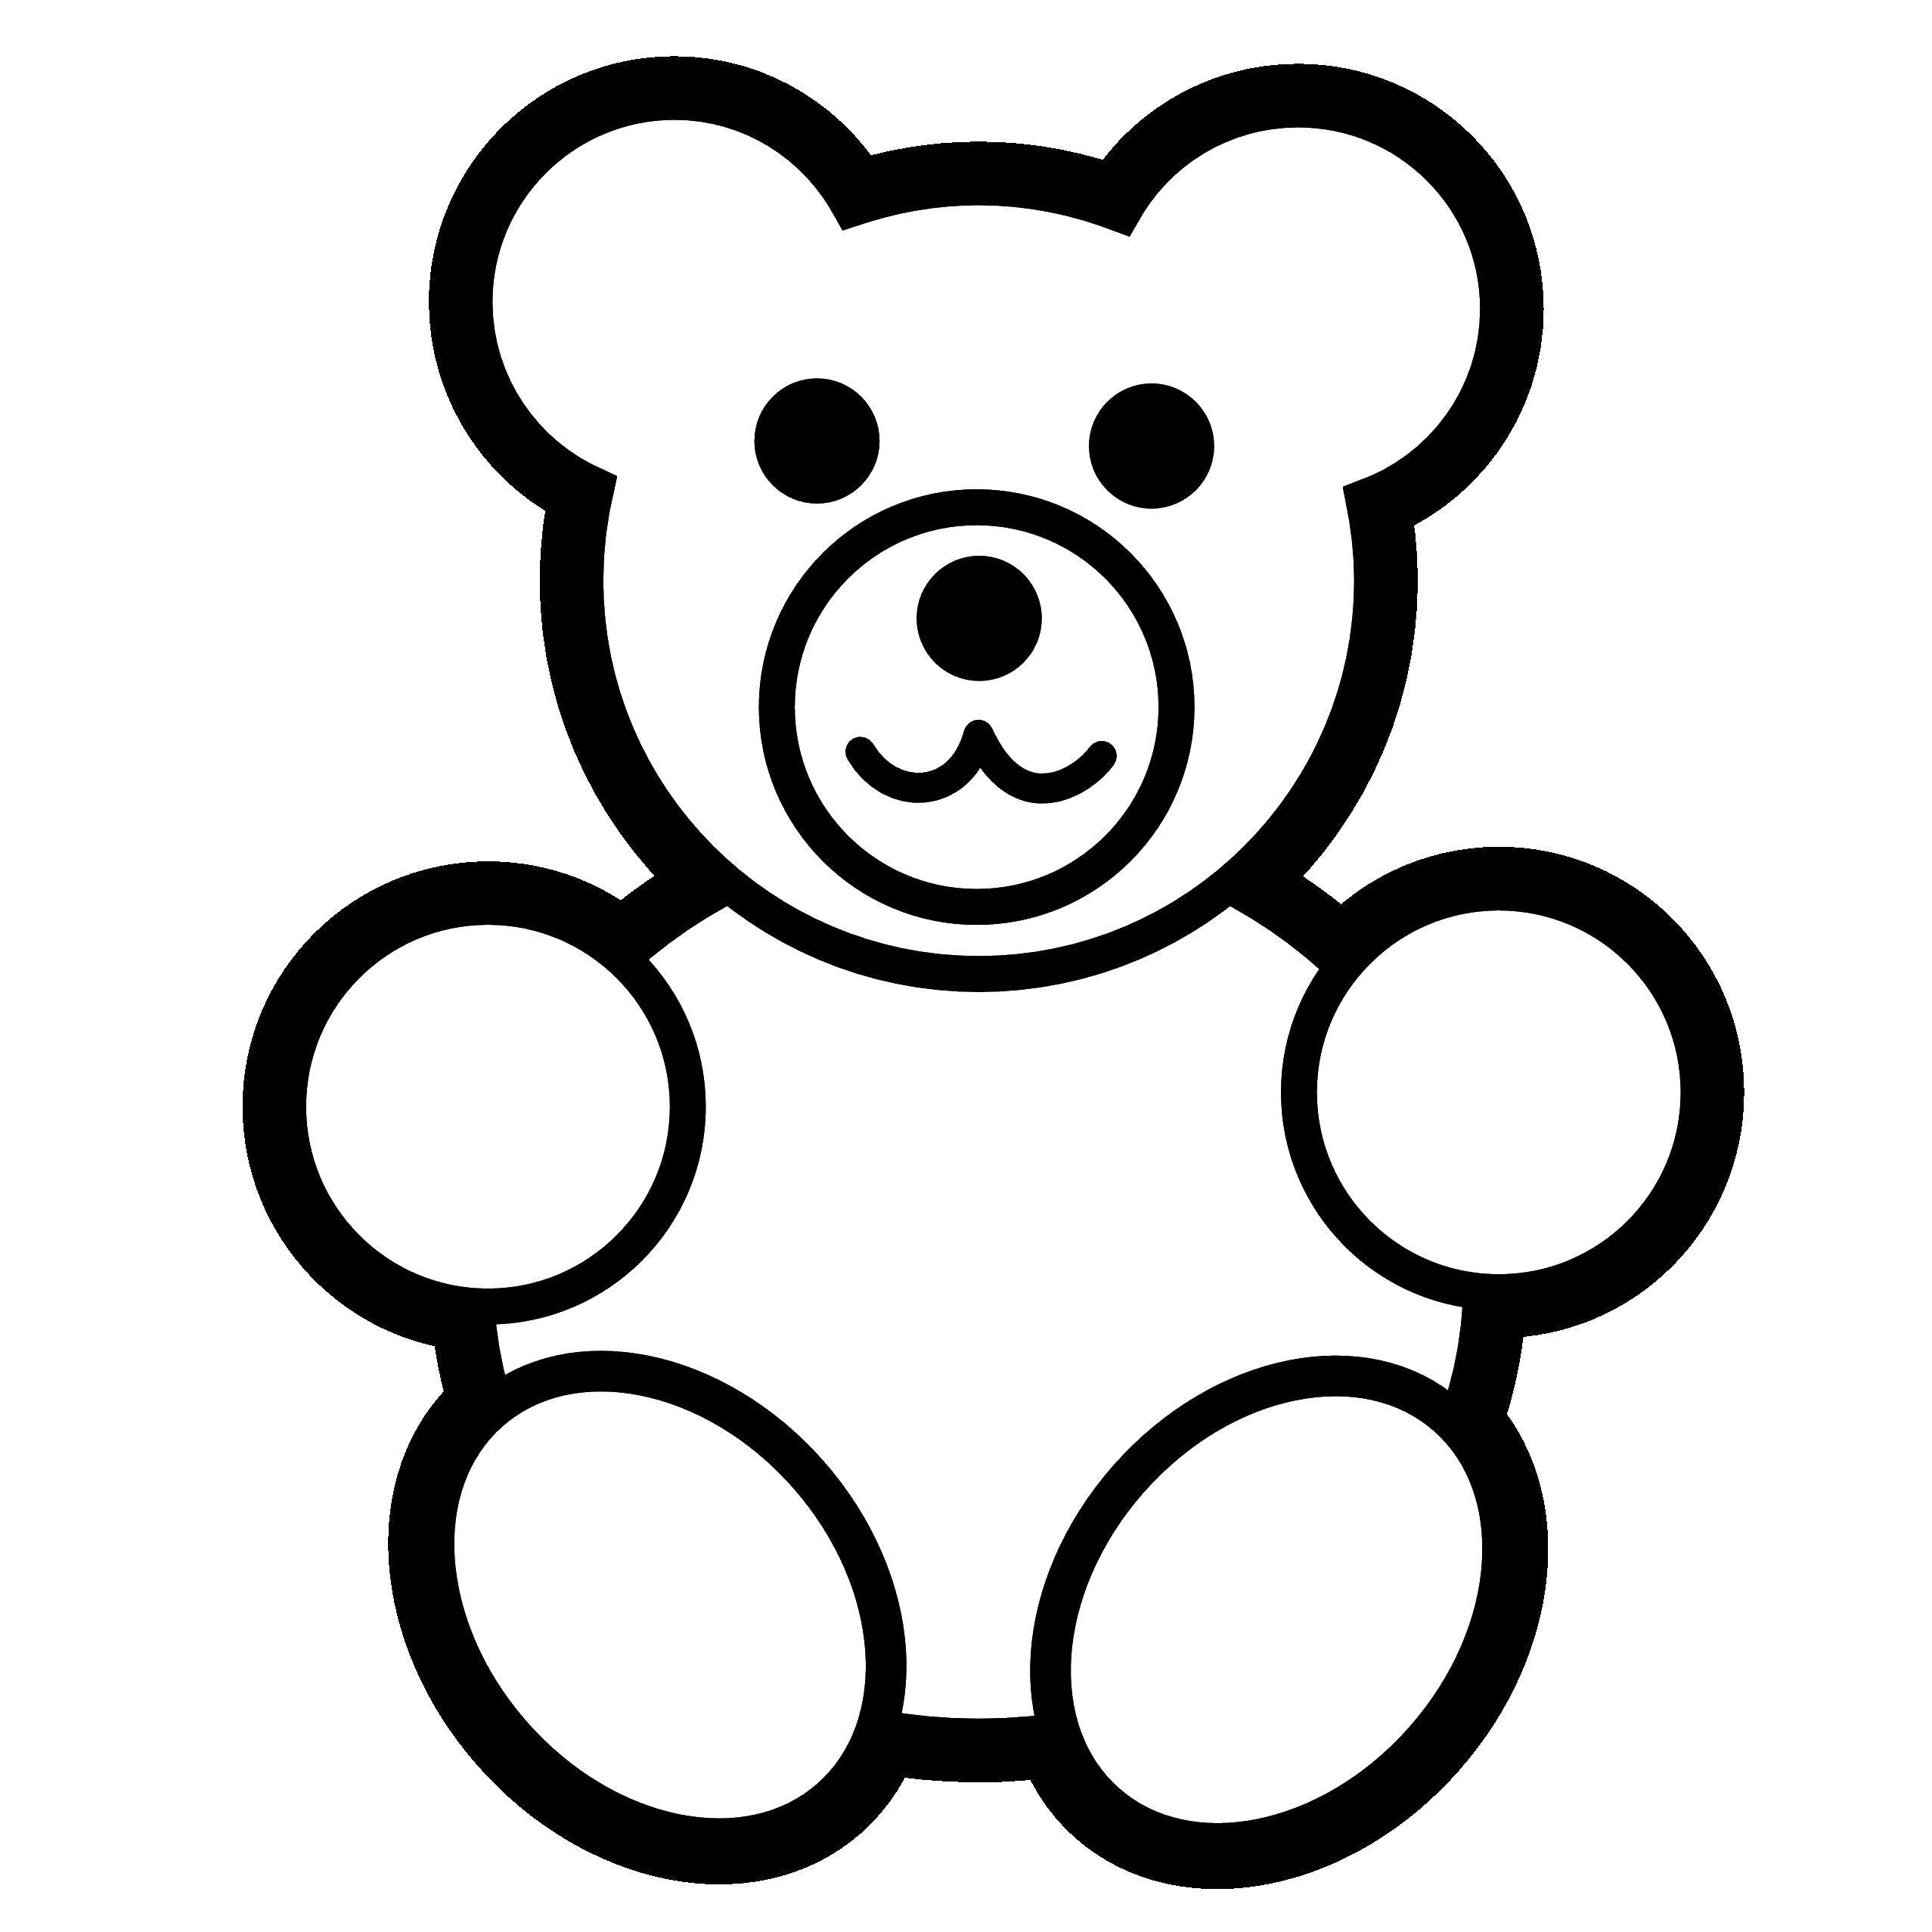 Название: Раскраска Игрушка медведь. Категория: игрушки. Теги: игрушка, мишка, бантик.